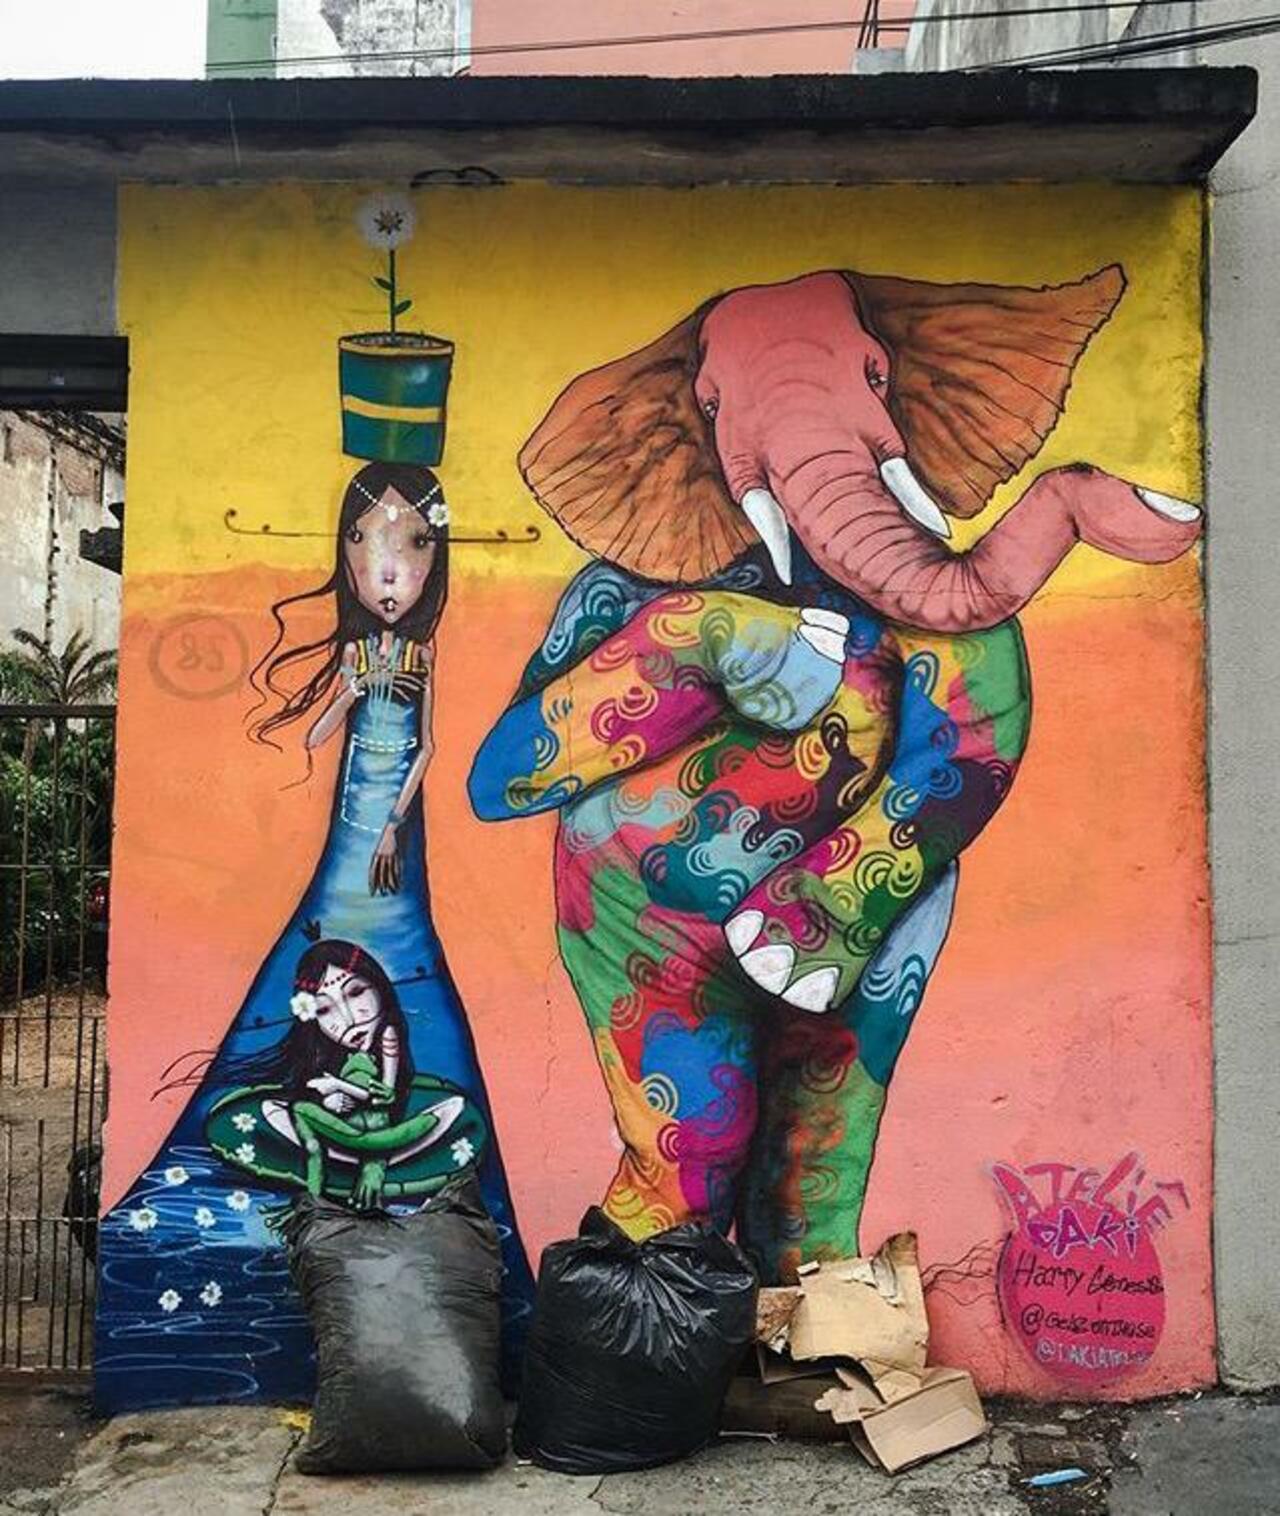 Street Art by Harry Geneis & Gelson in São Paulo 

#art #mural #graffiti #streetart http://t.co/LQYNHOhS4v